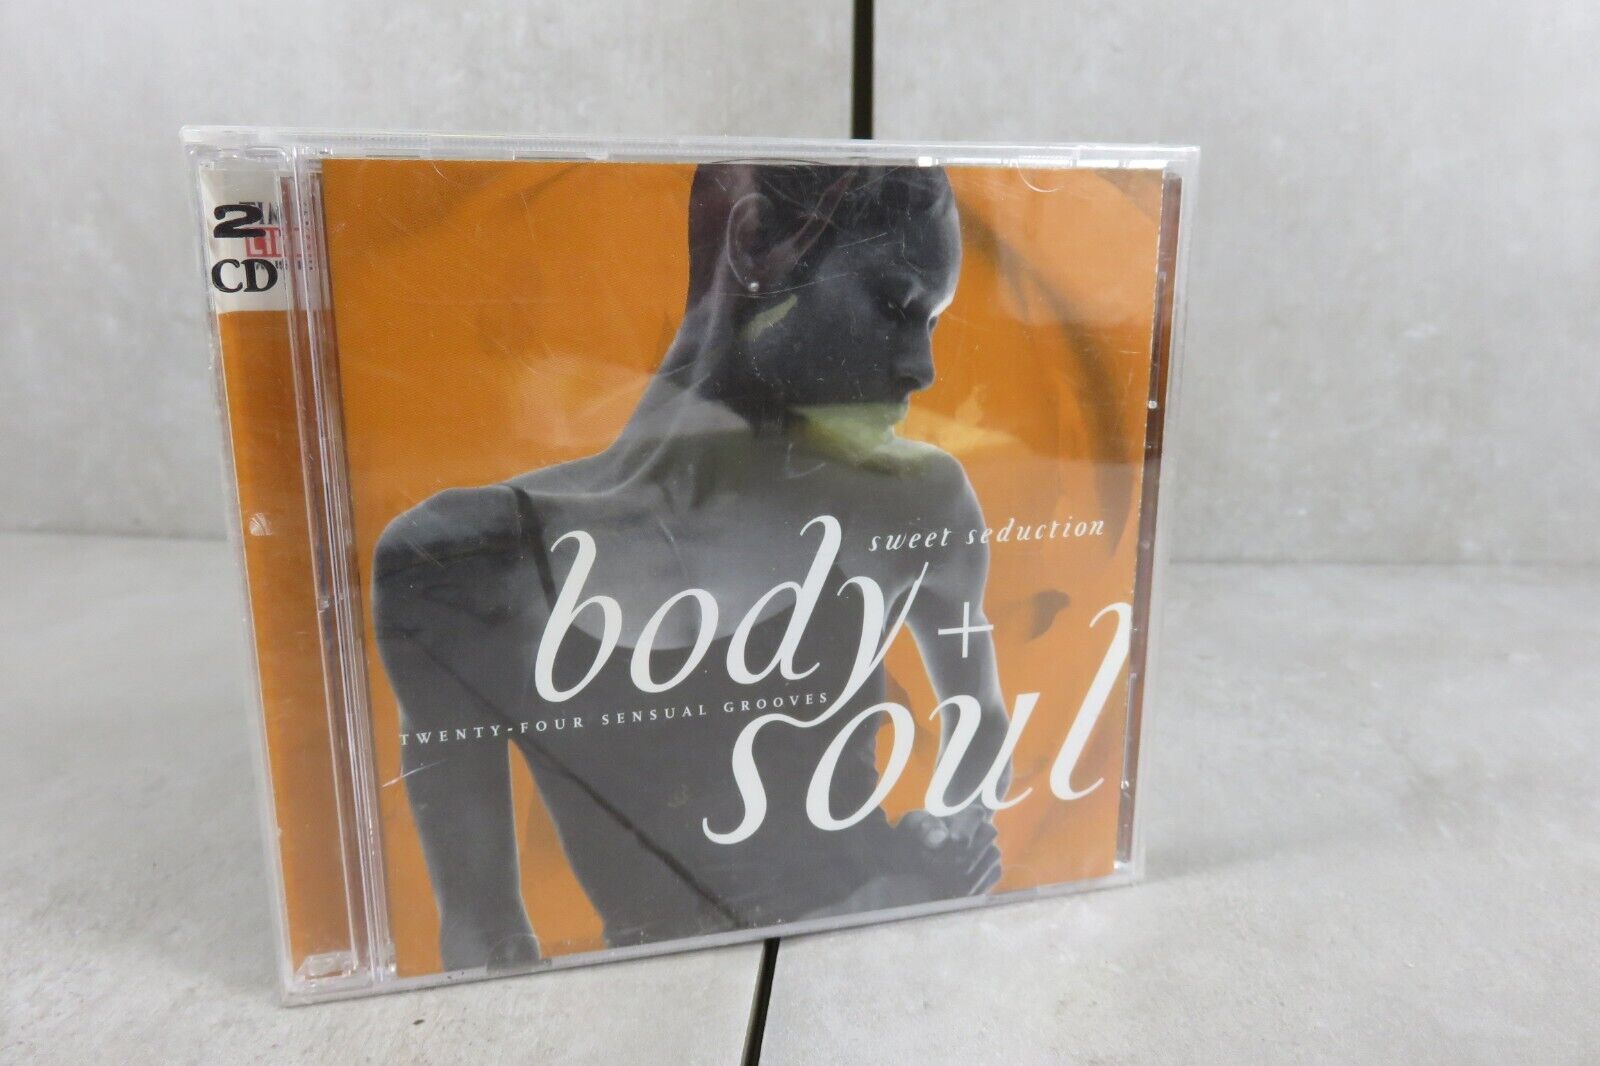 Body & Soul : Sweet Seduction Various Artists 2 Disc Set - Audio CD**BRAND NEW**